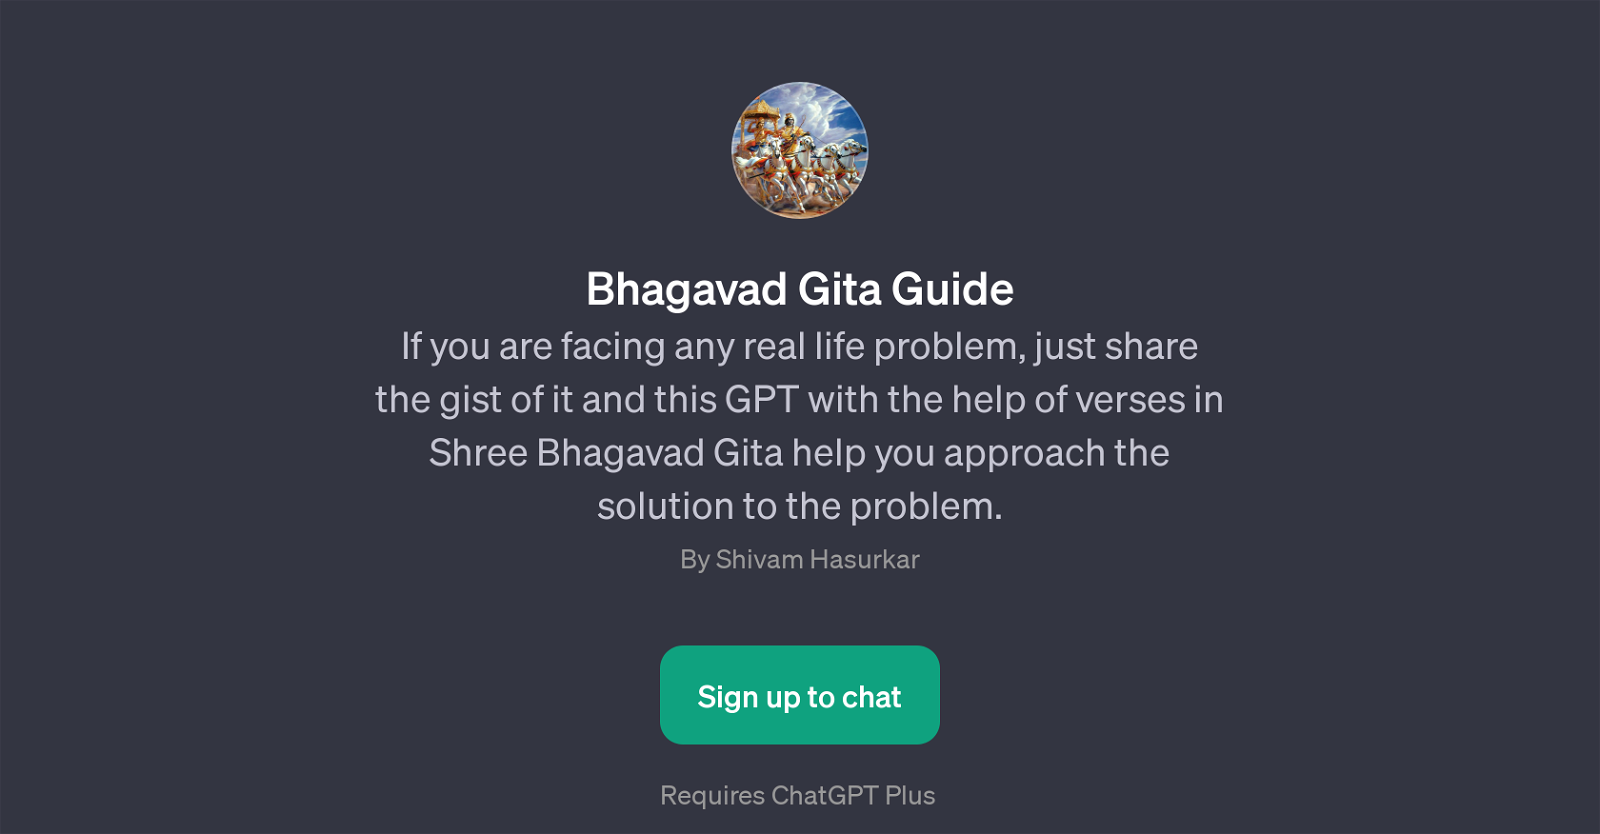 Bhagavad Gita Guide website